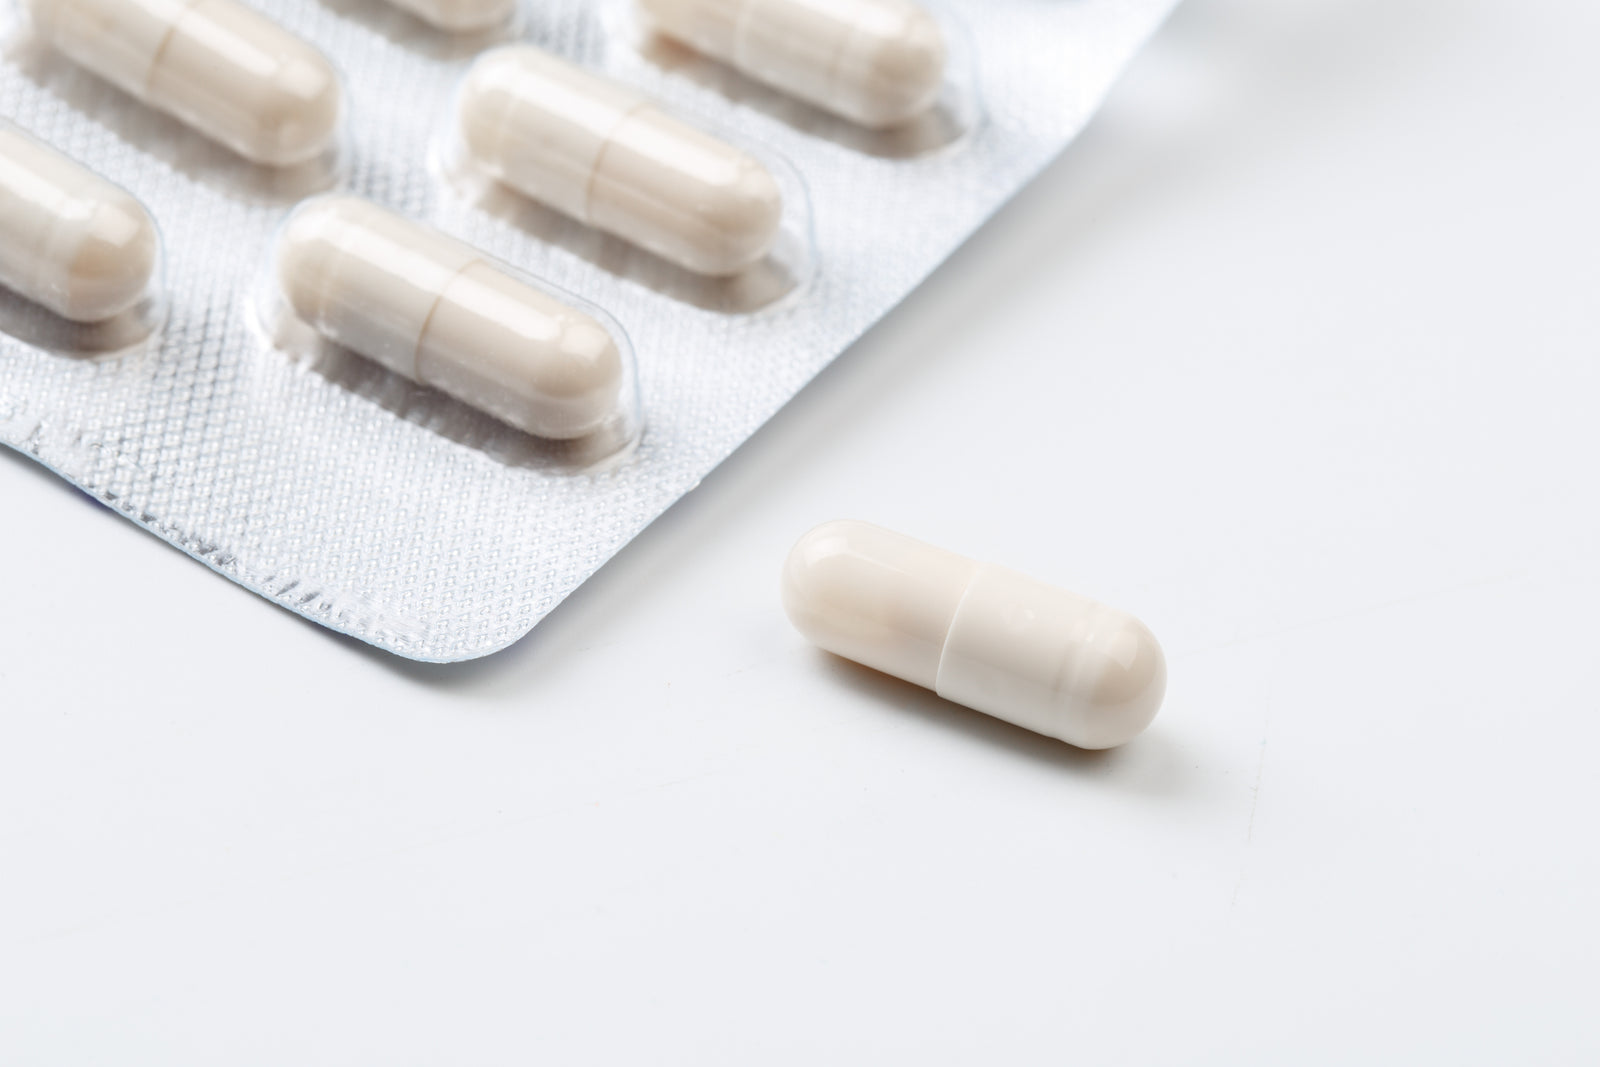 How Long After Taking Antibiotics Should I Take Probiotics?